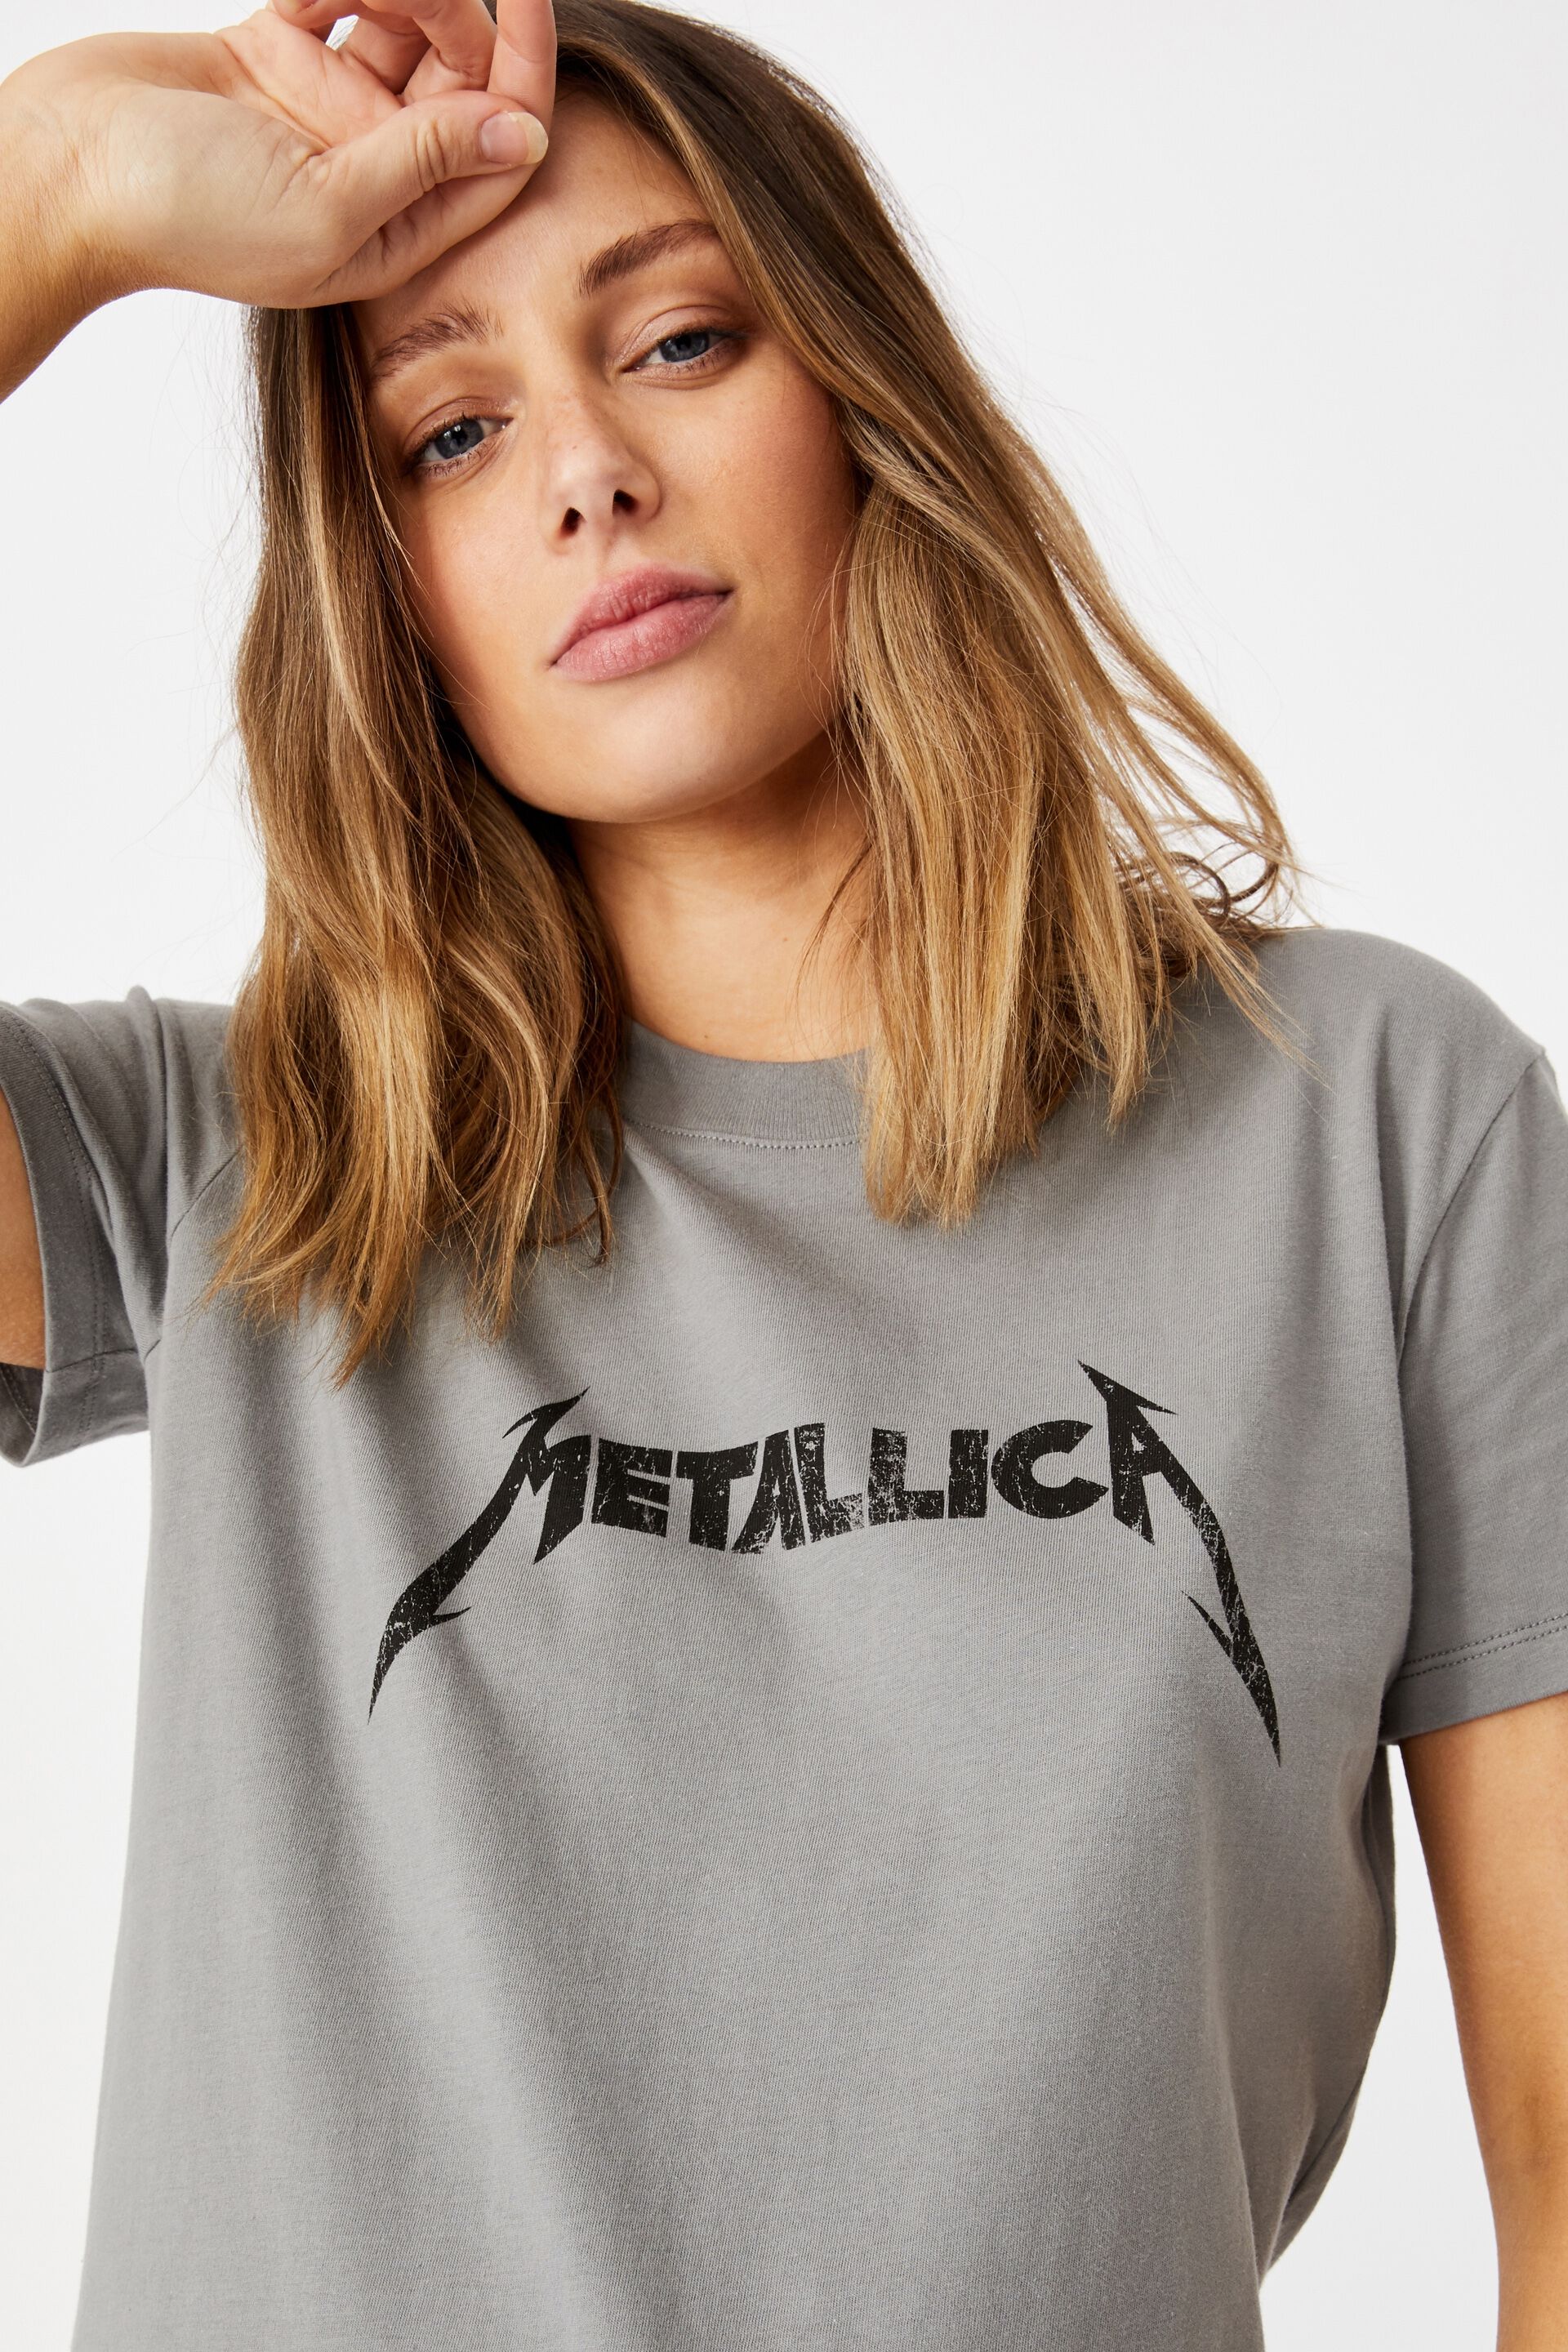 Classic Metallica T Shirt